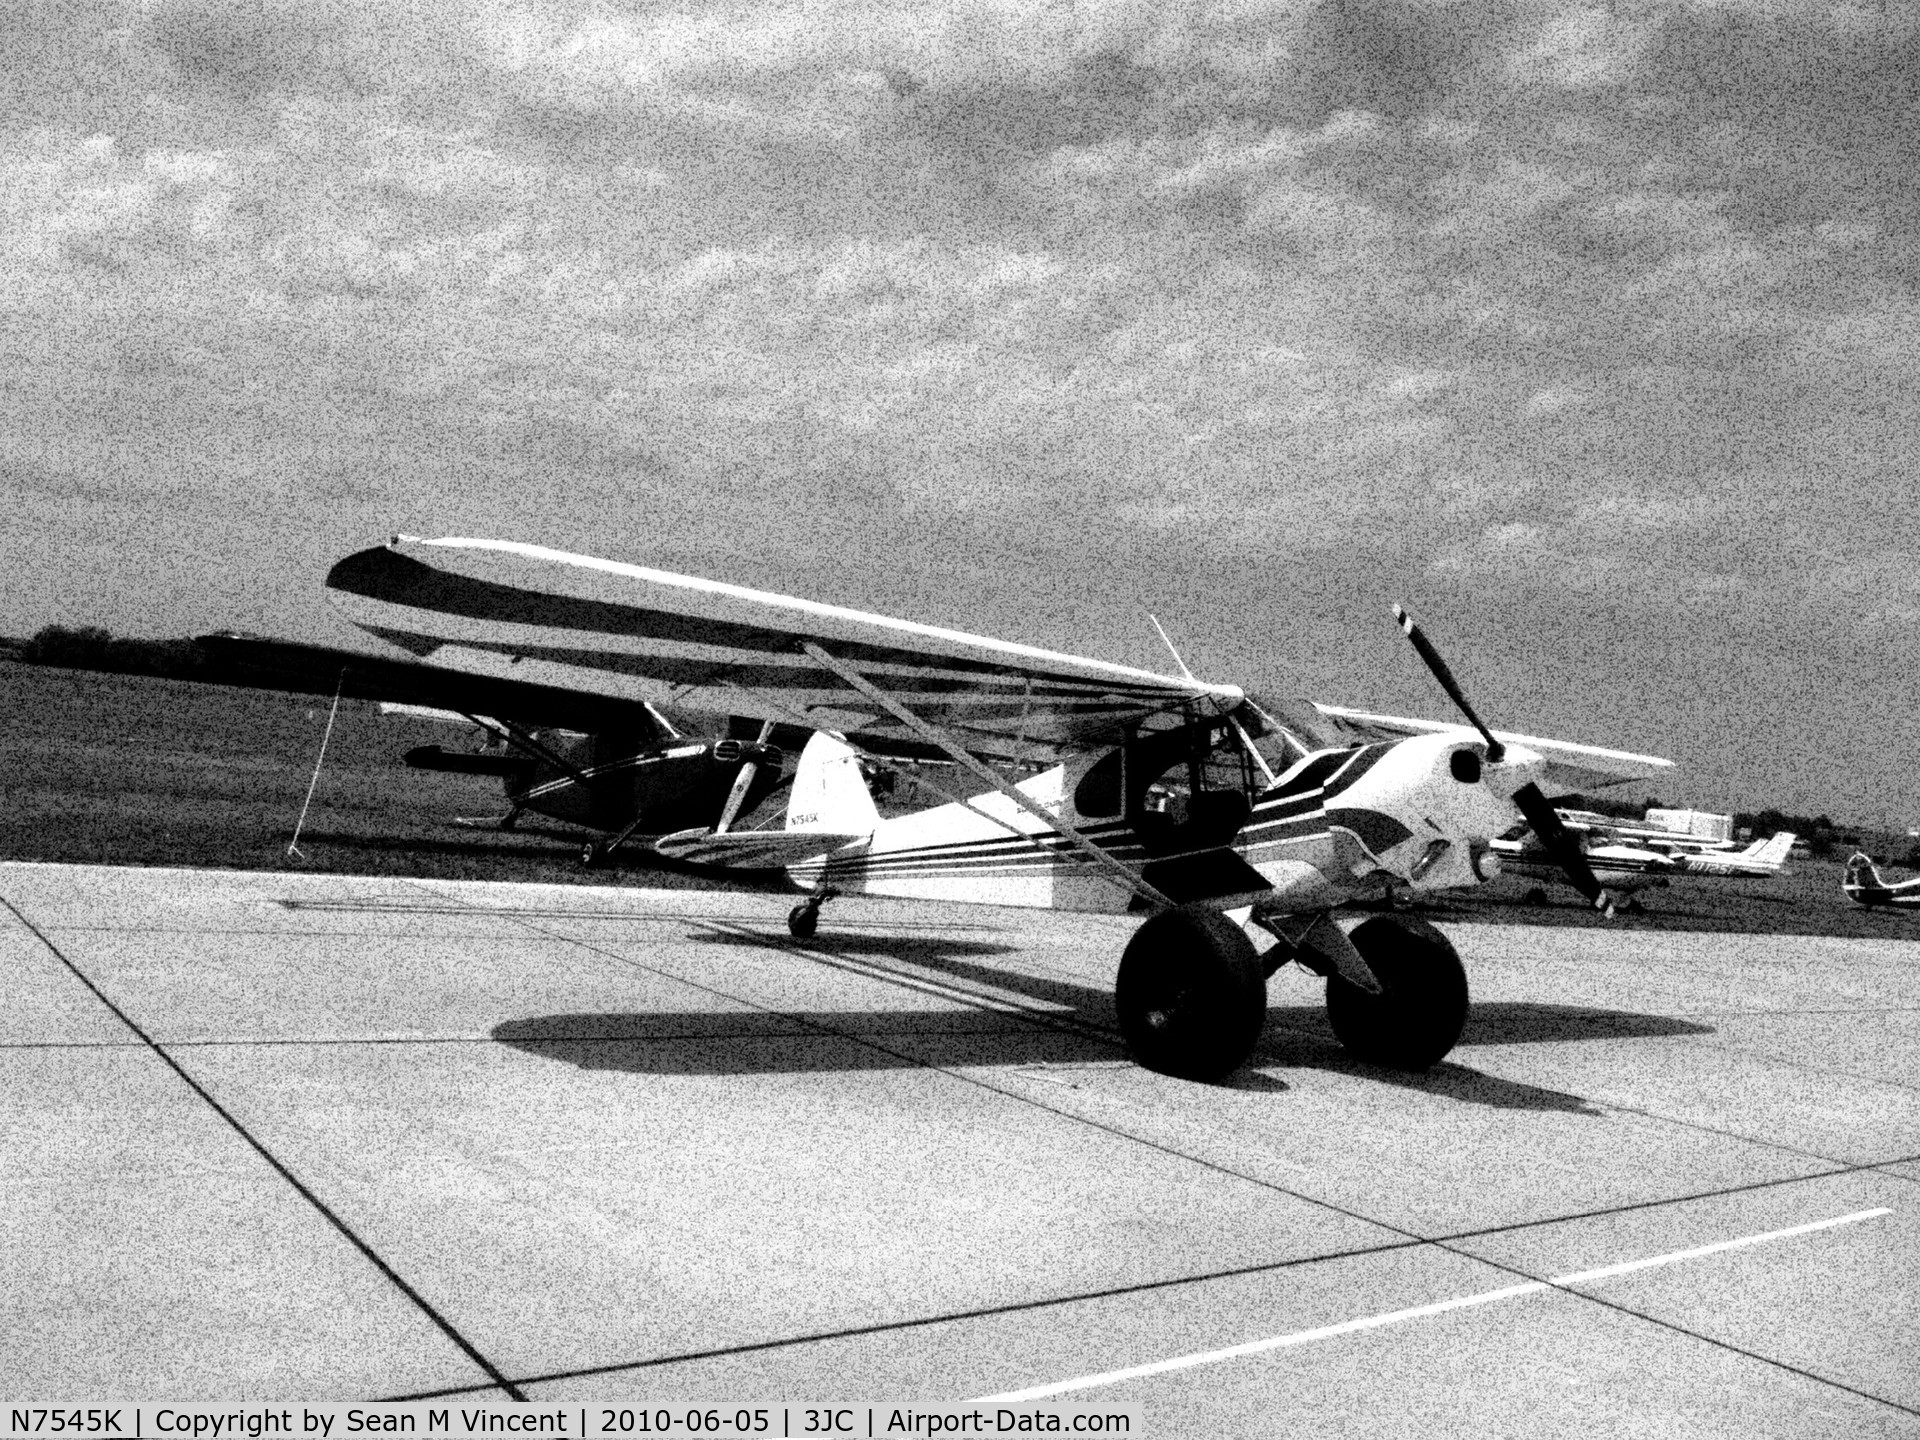 N7545K, 1950 Piper PA-18-105 Super Cub C/N 18-261, Picture taken at Freeman Field in Junction City, KS at National Bi-Plane Fly In